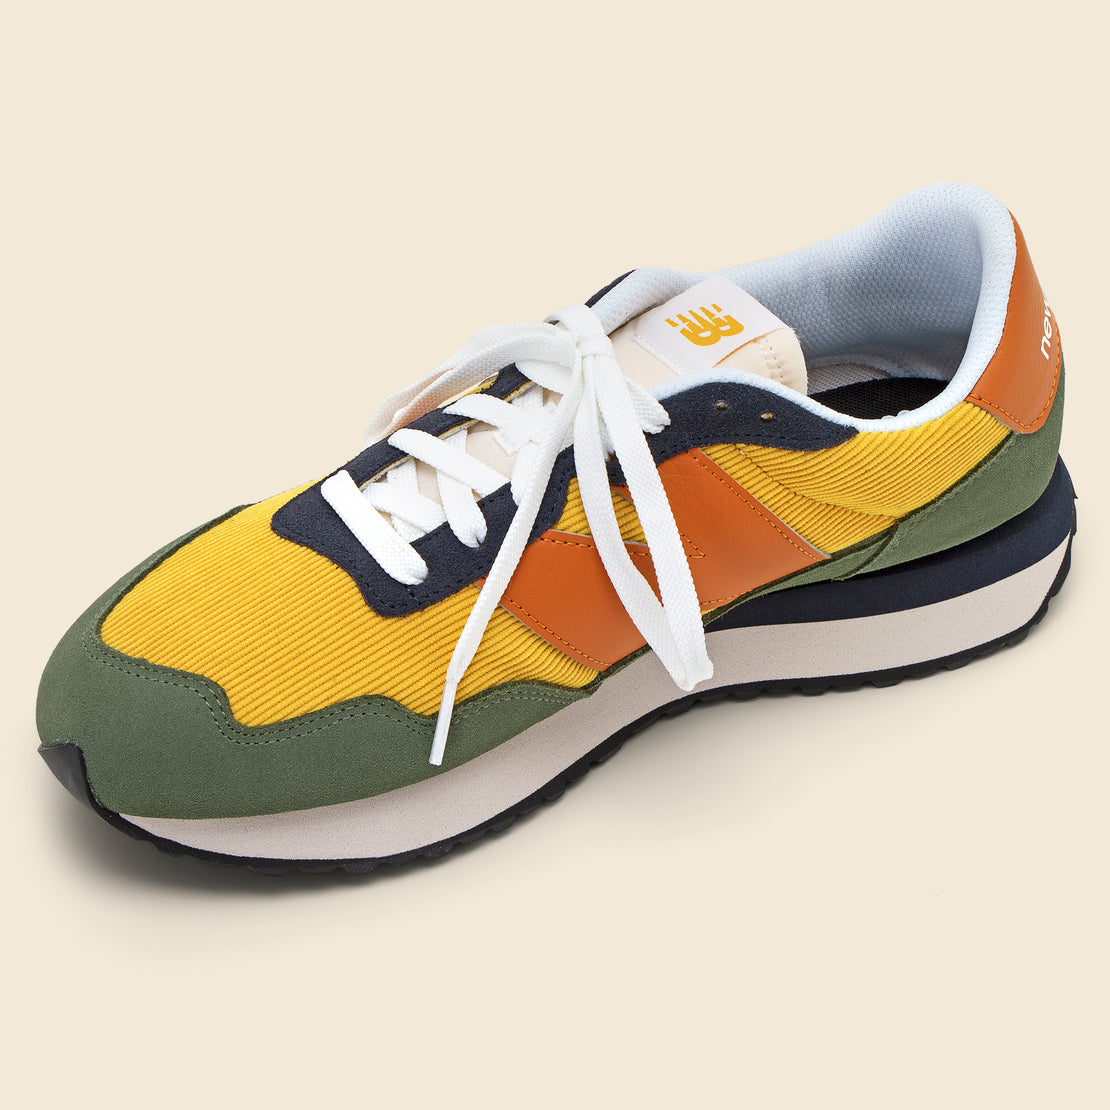 237V1 Sneaker - Harvest Gold/ Madras Orange